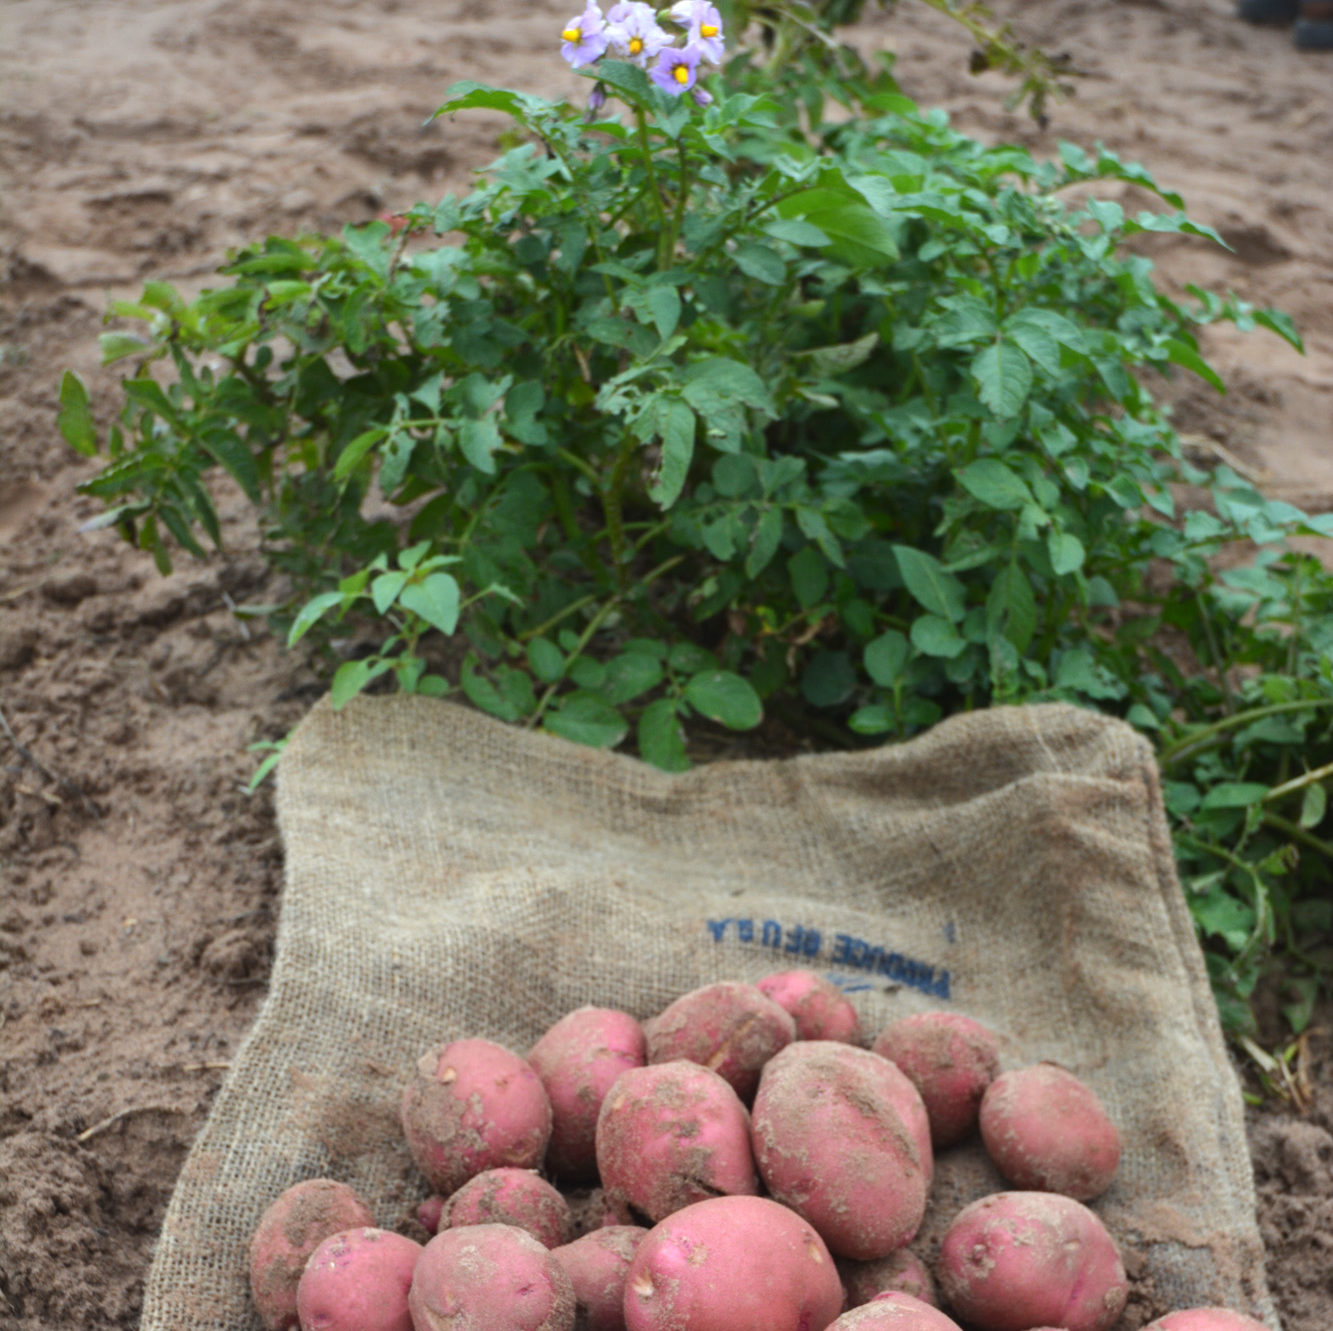 red potatoes lay on a potato sack below a flowering potato plant